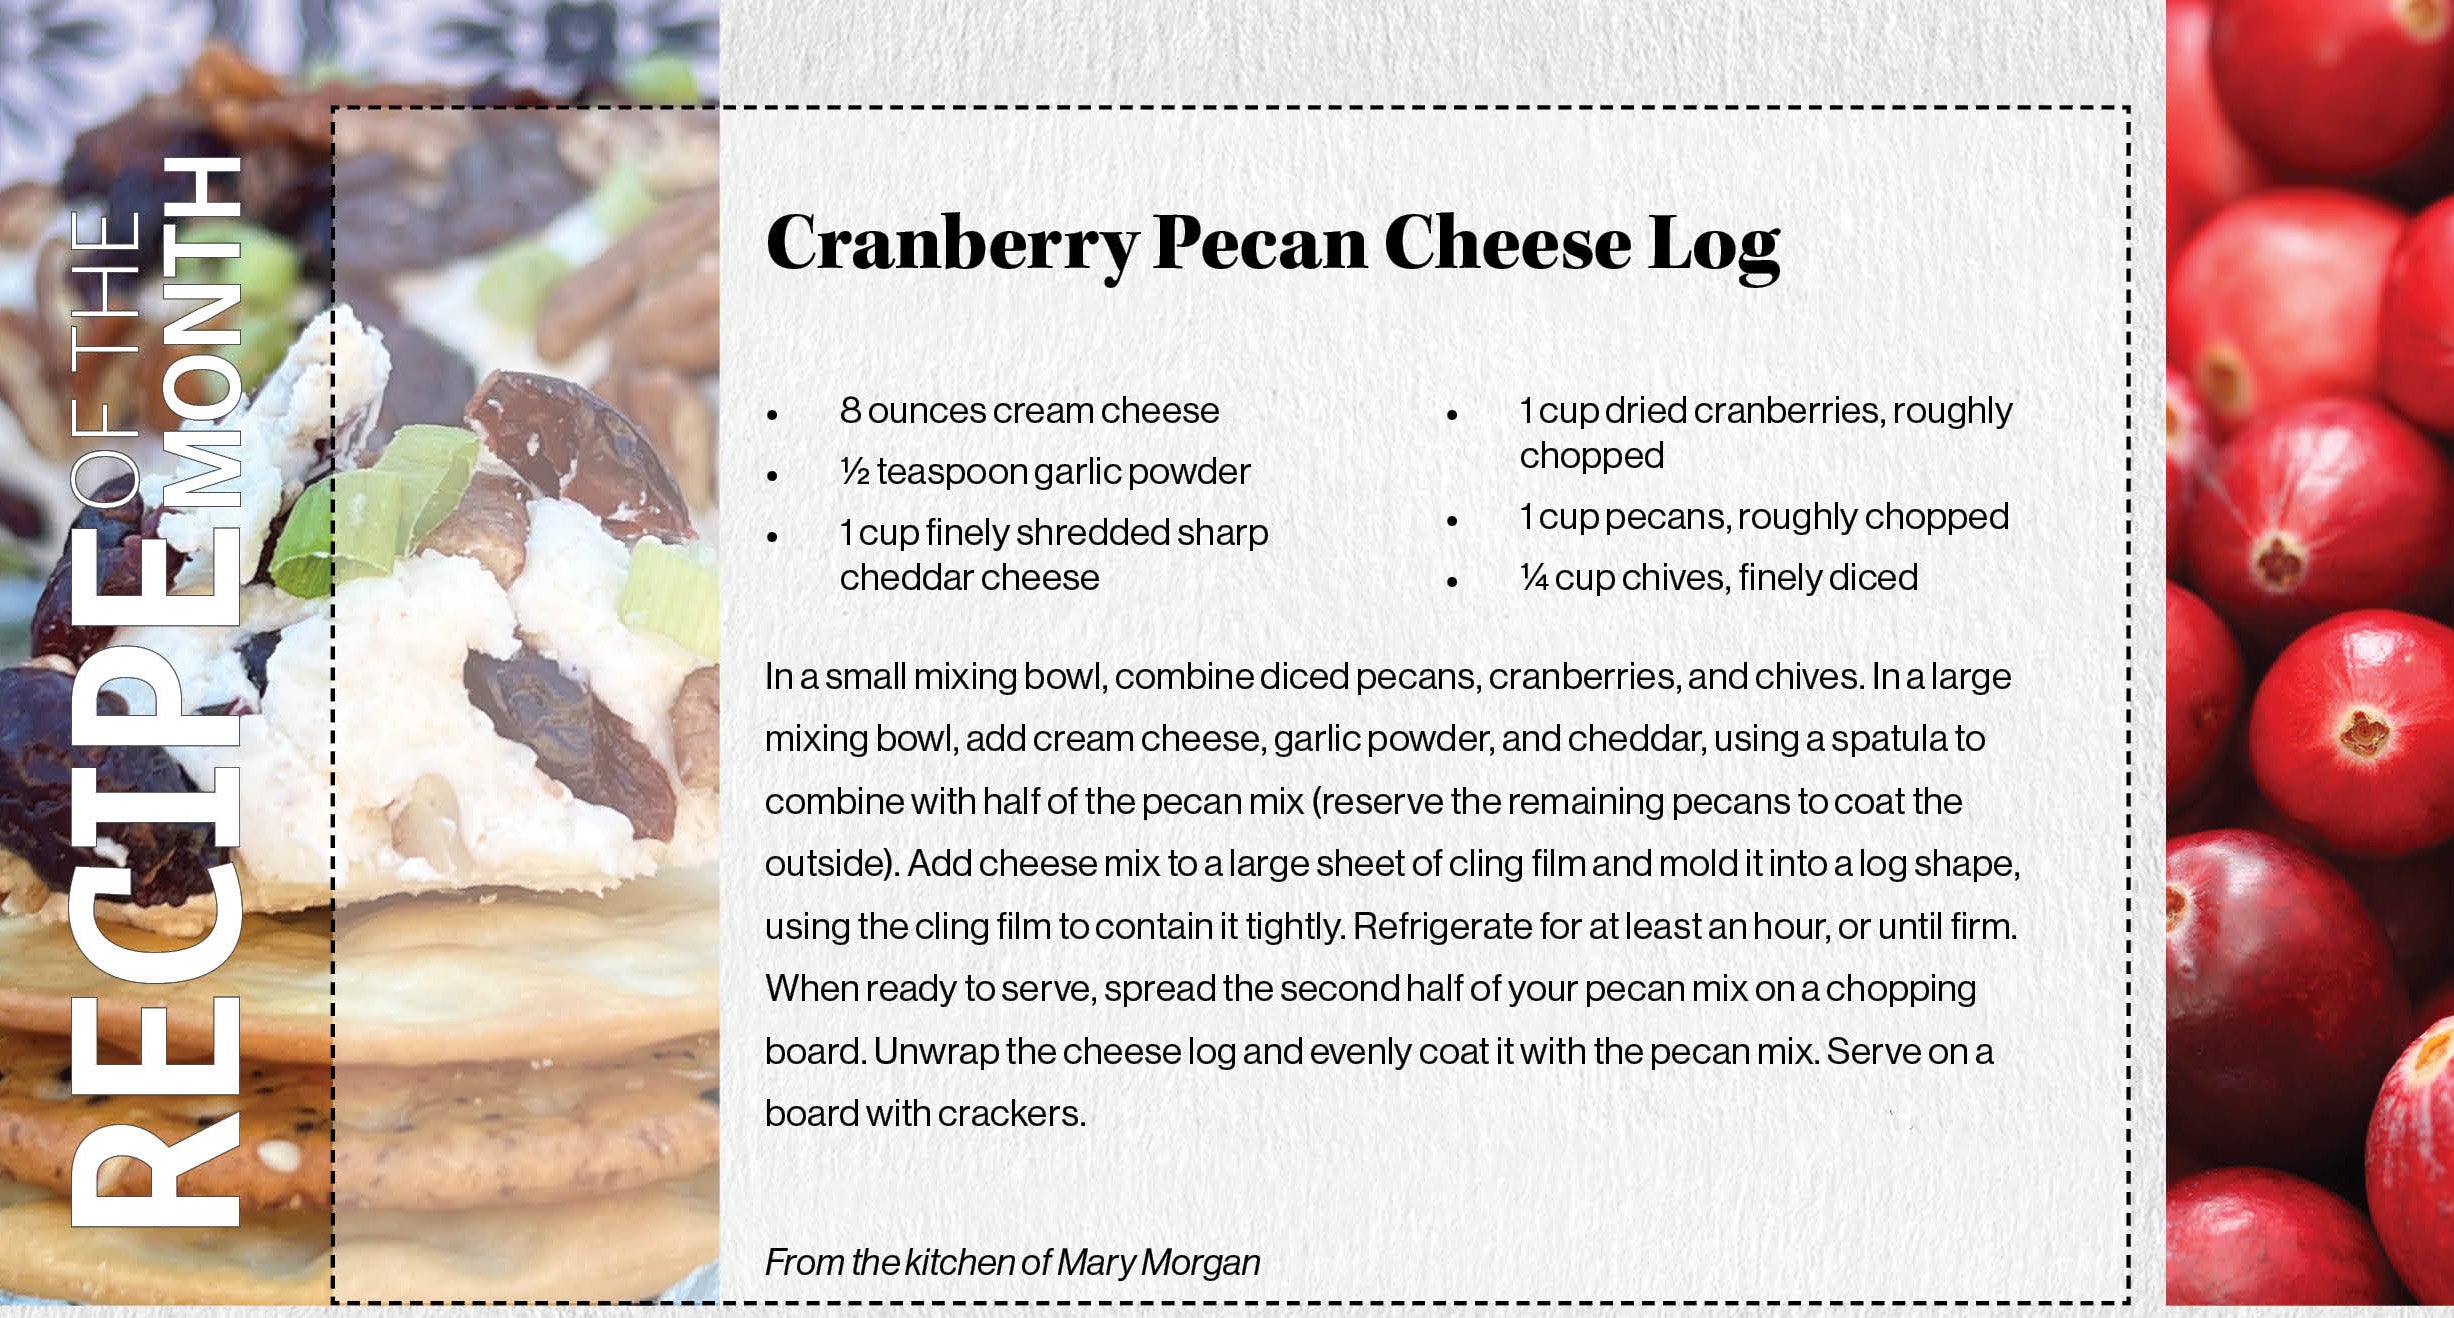 Cranberry log